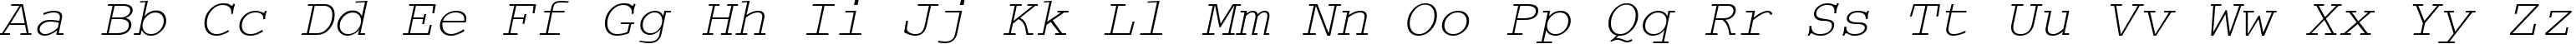 Пример написания английского алфавита шрифтом CourierTM Italic